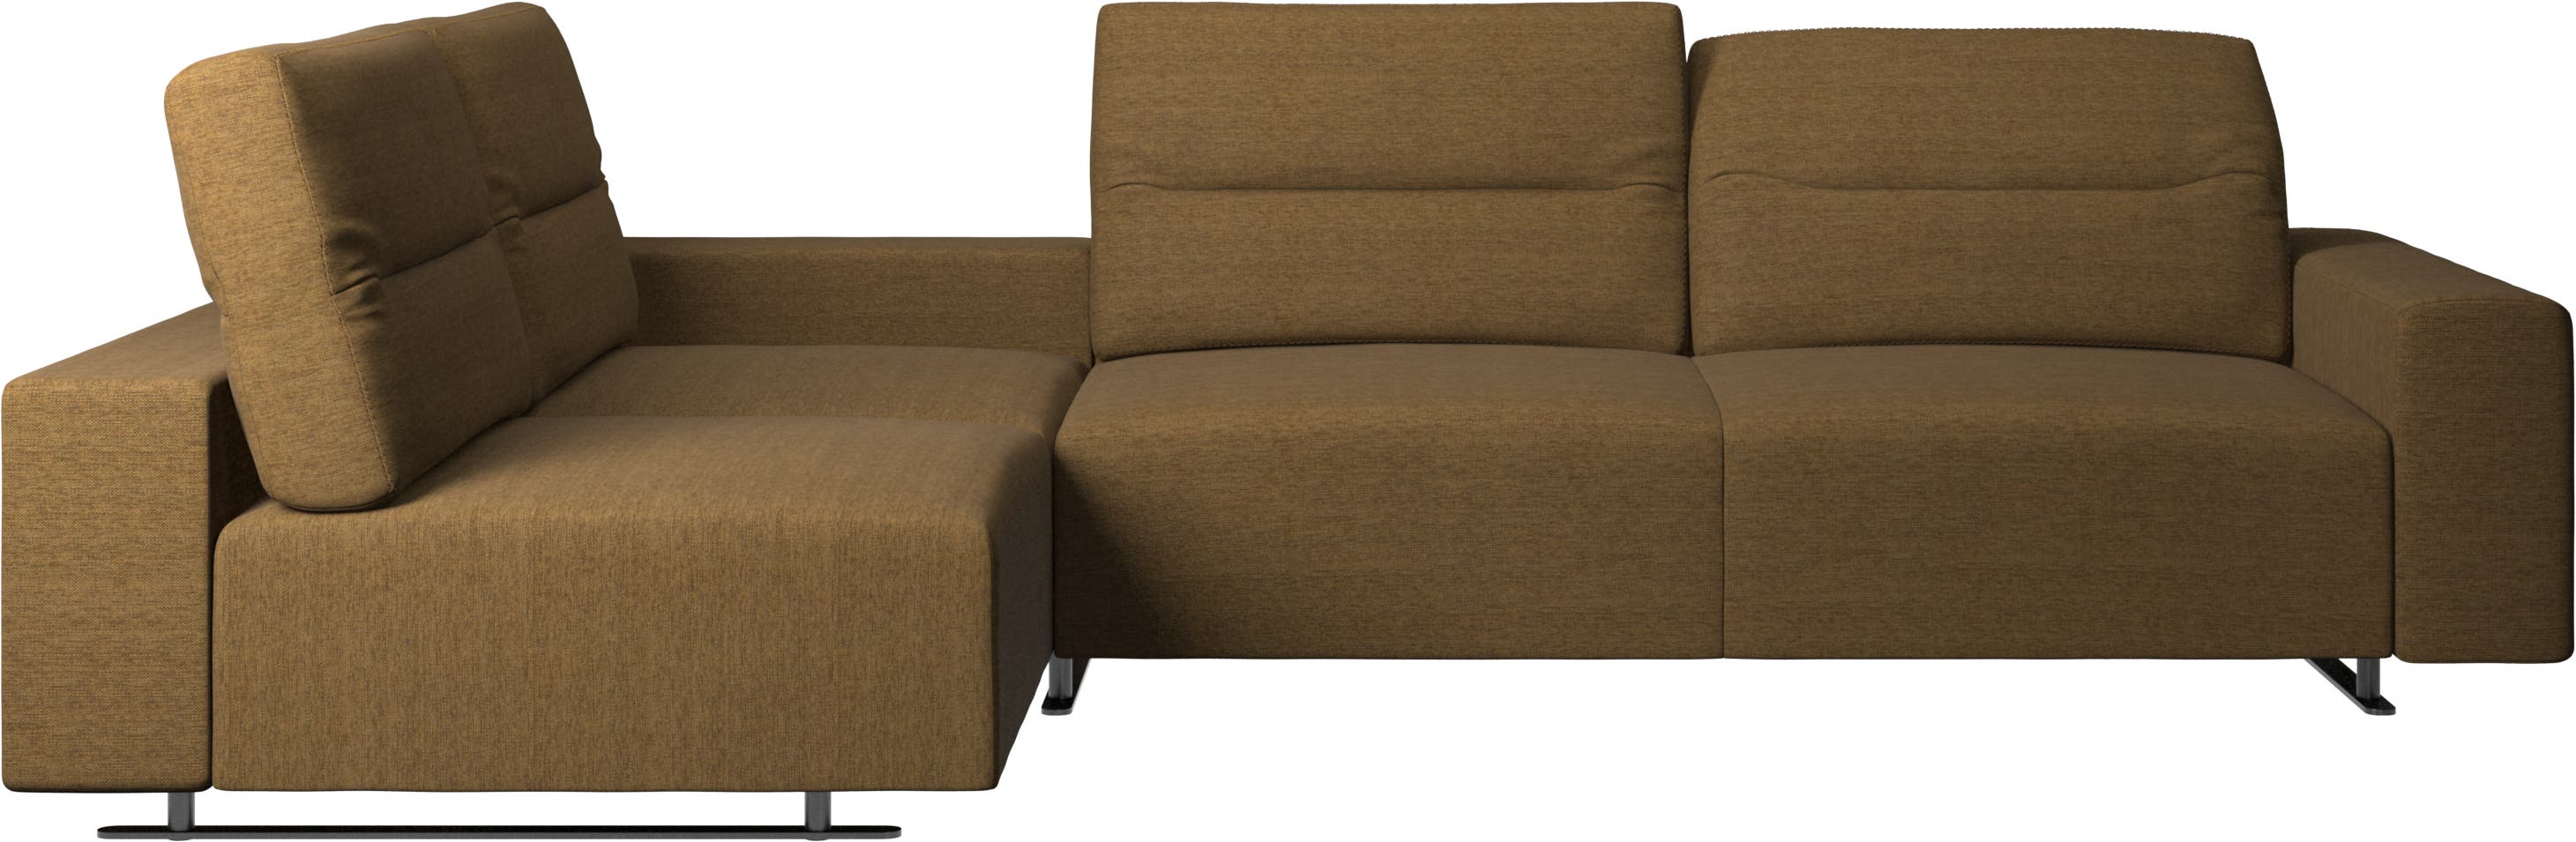 Hampton corner sofa with adjustable back and storage on right side